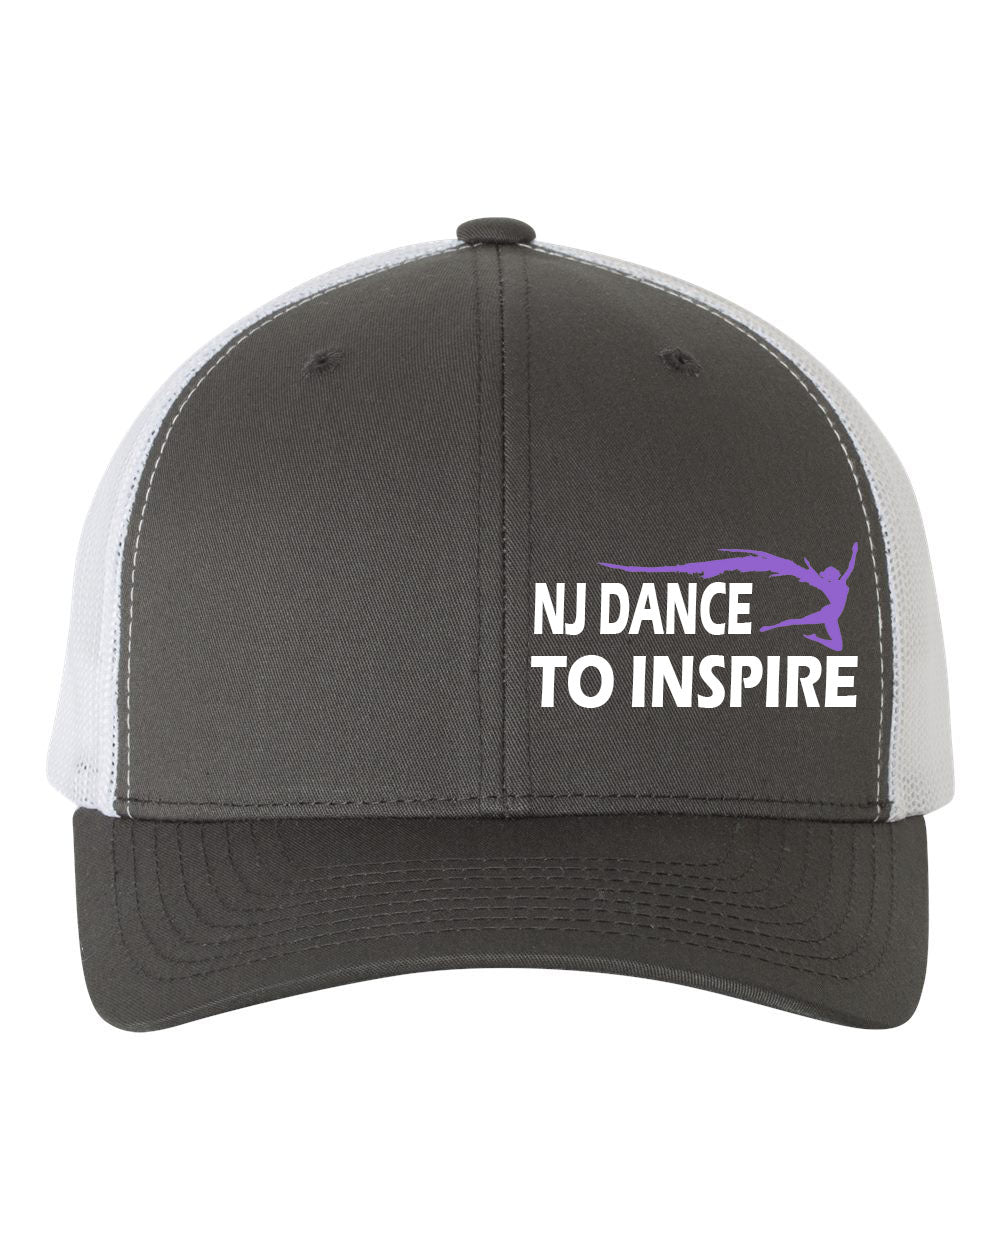 NJ Dance Design 2 Trucker Hat